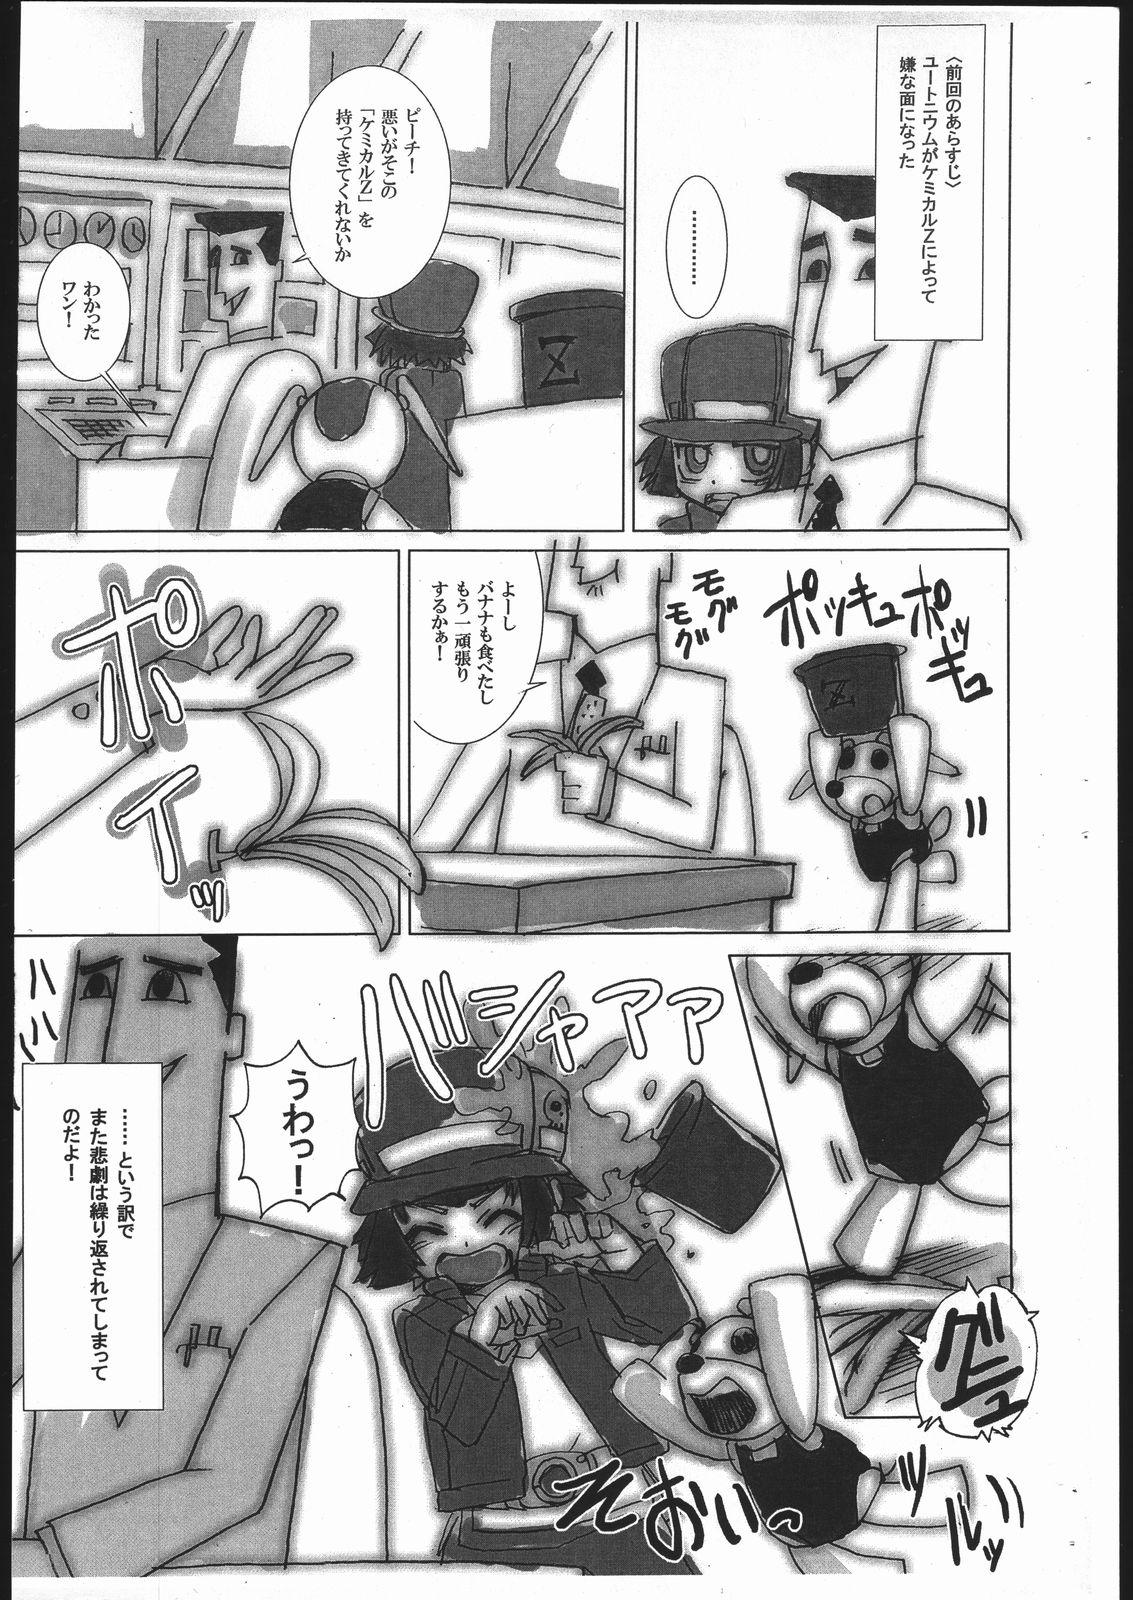 Gemidos PPGZH 2 - Powerpuff girls z Hentai - Page 2